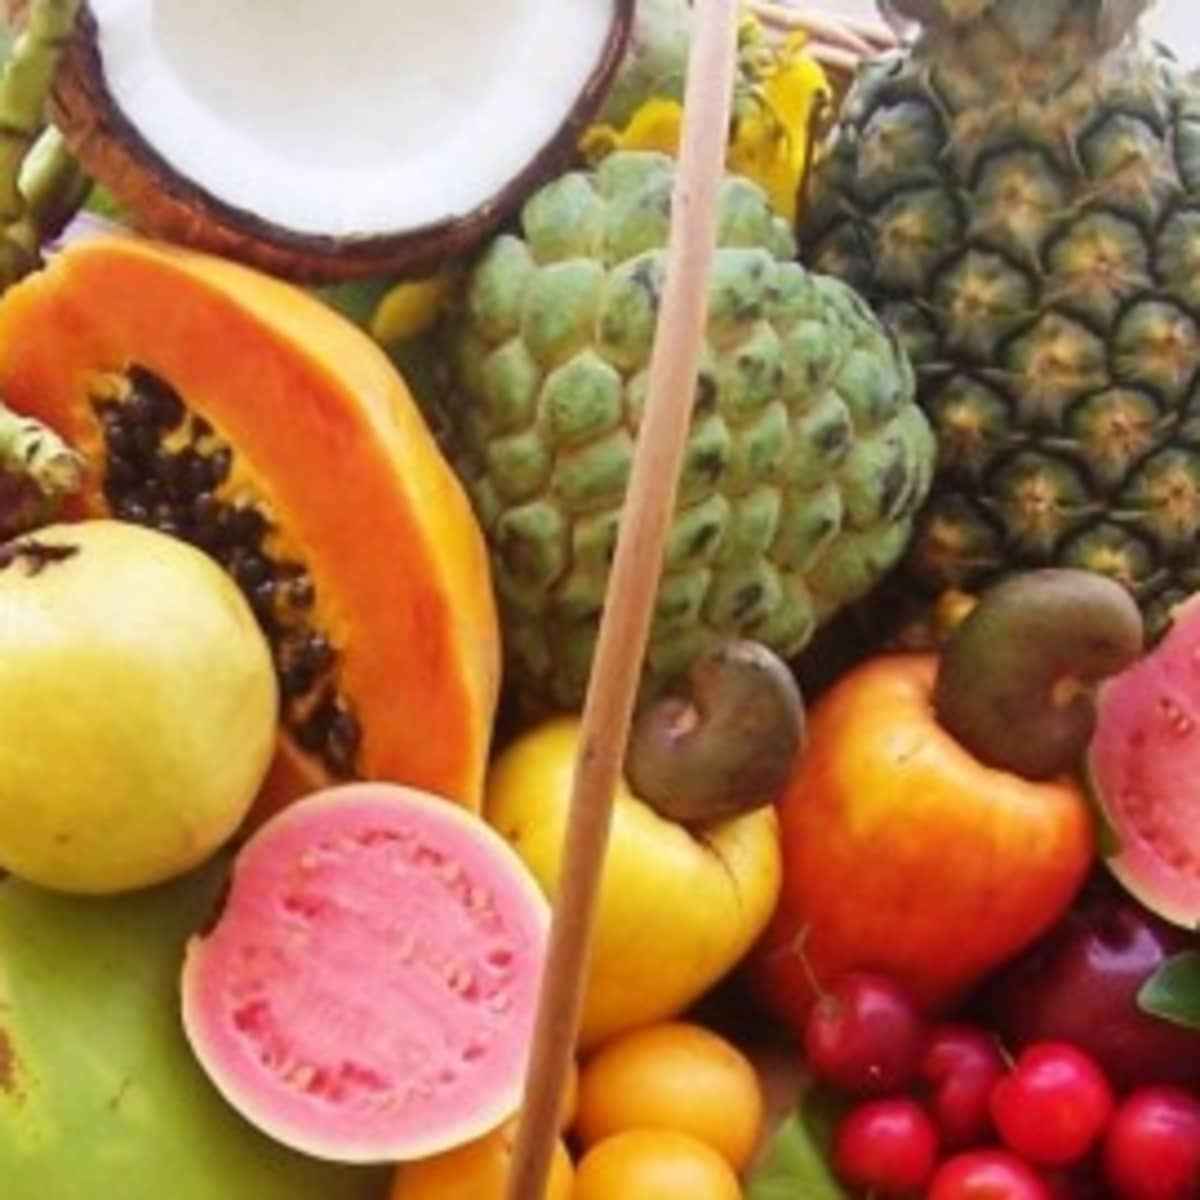 Discover 6 native Brazilian fruits